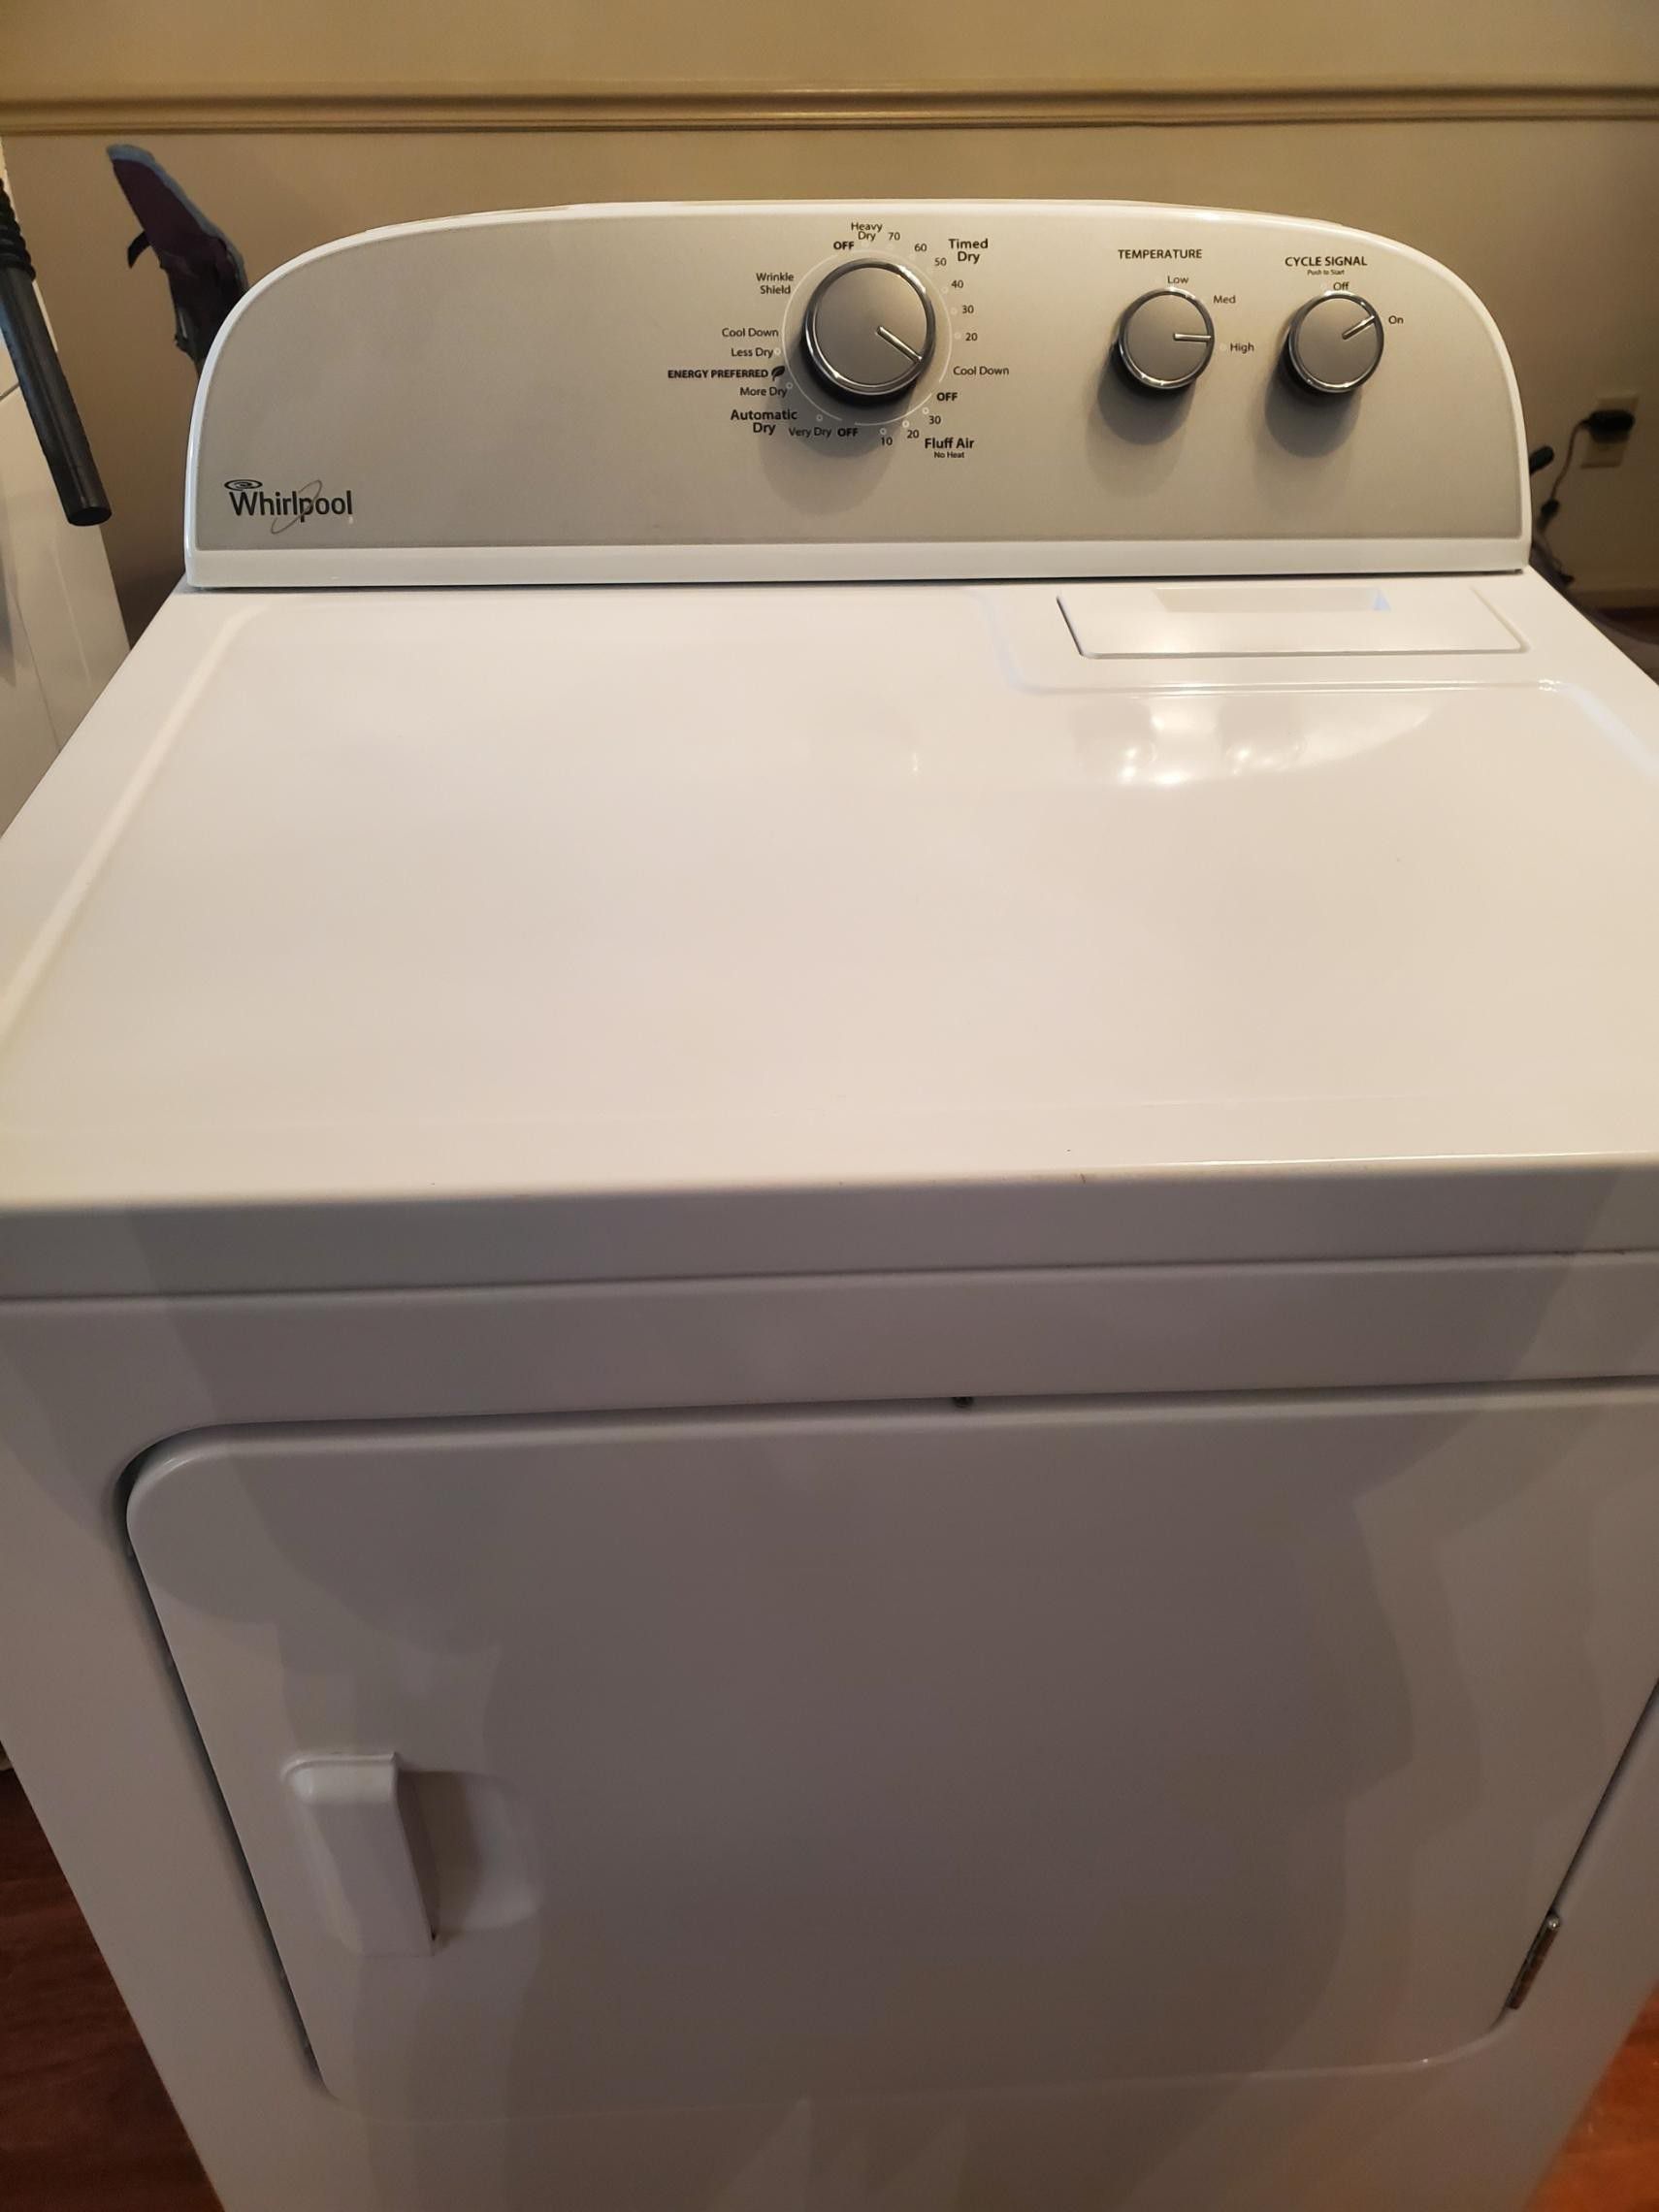 Dryer whirlpool